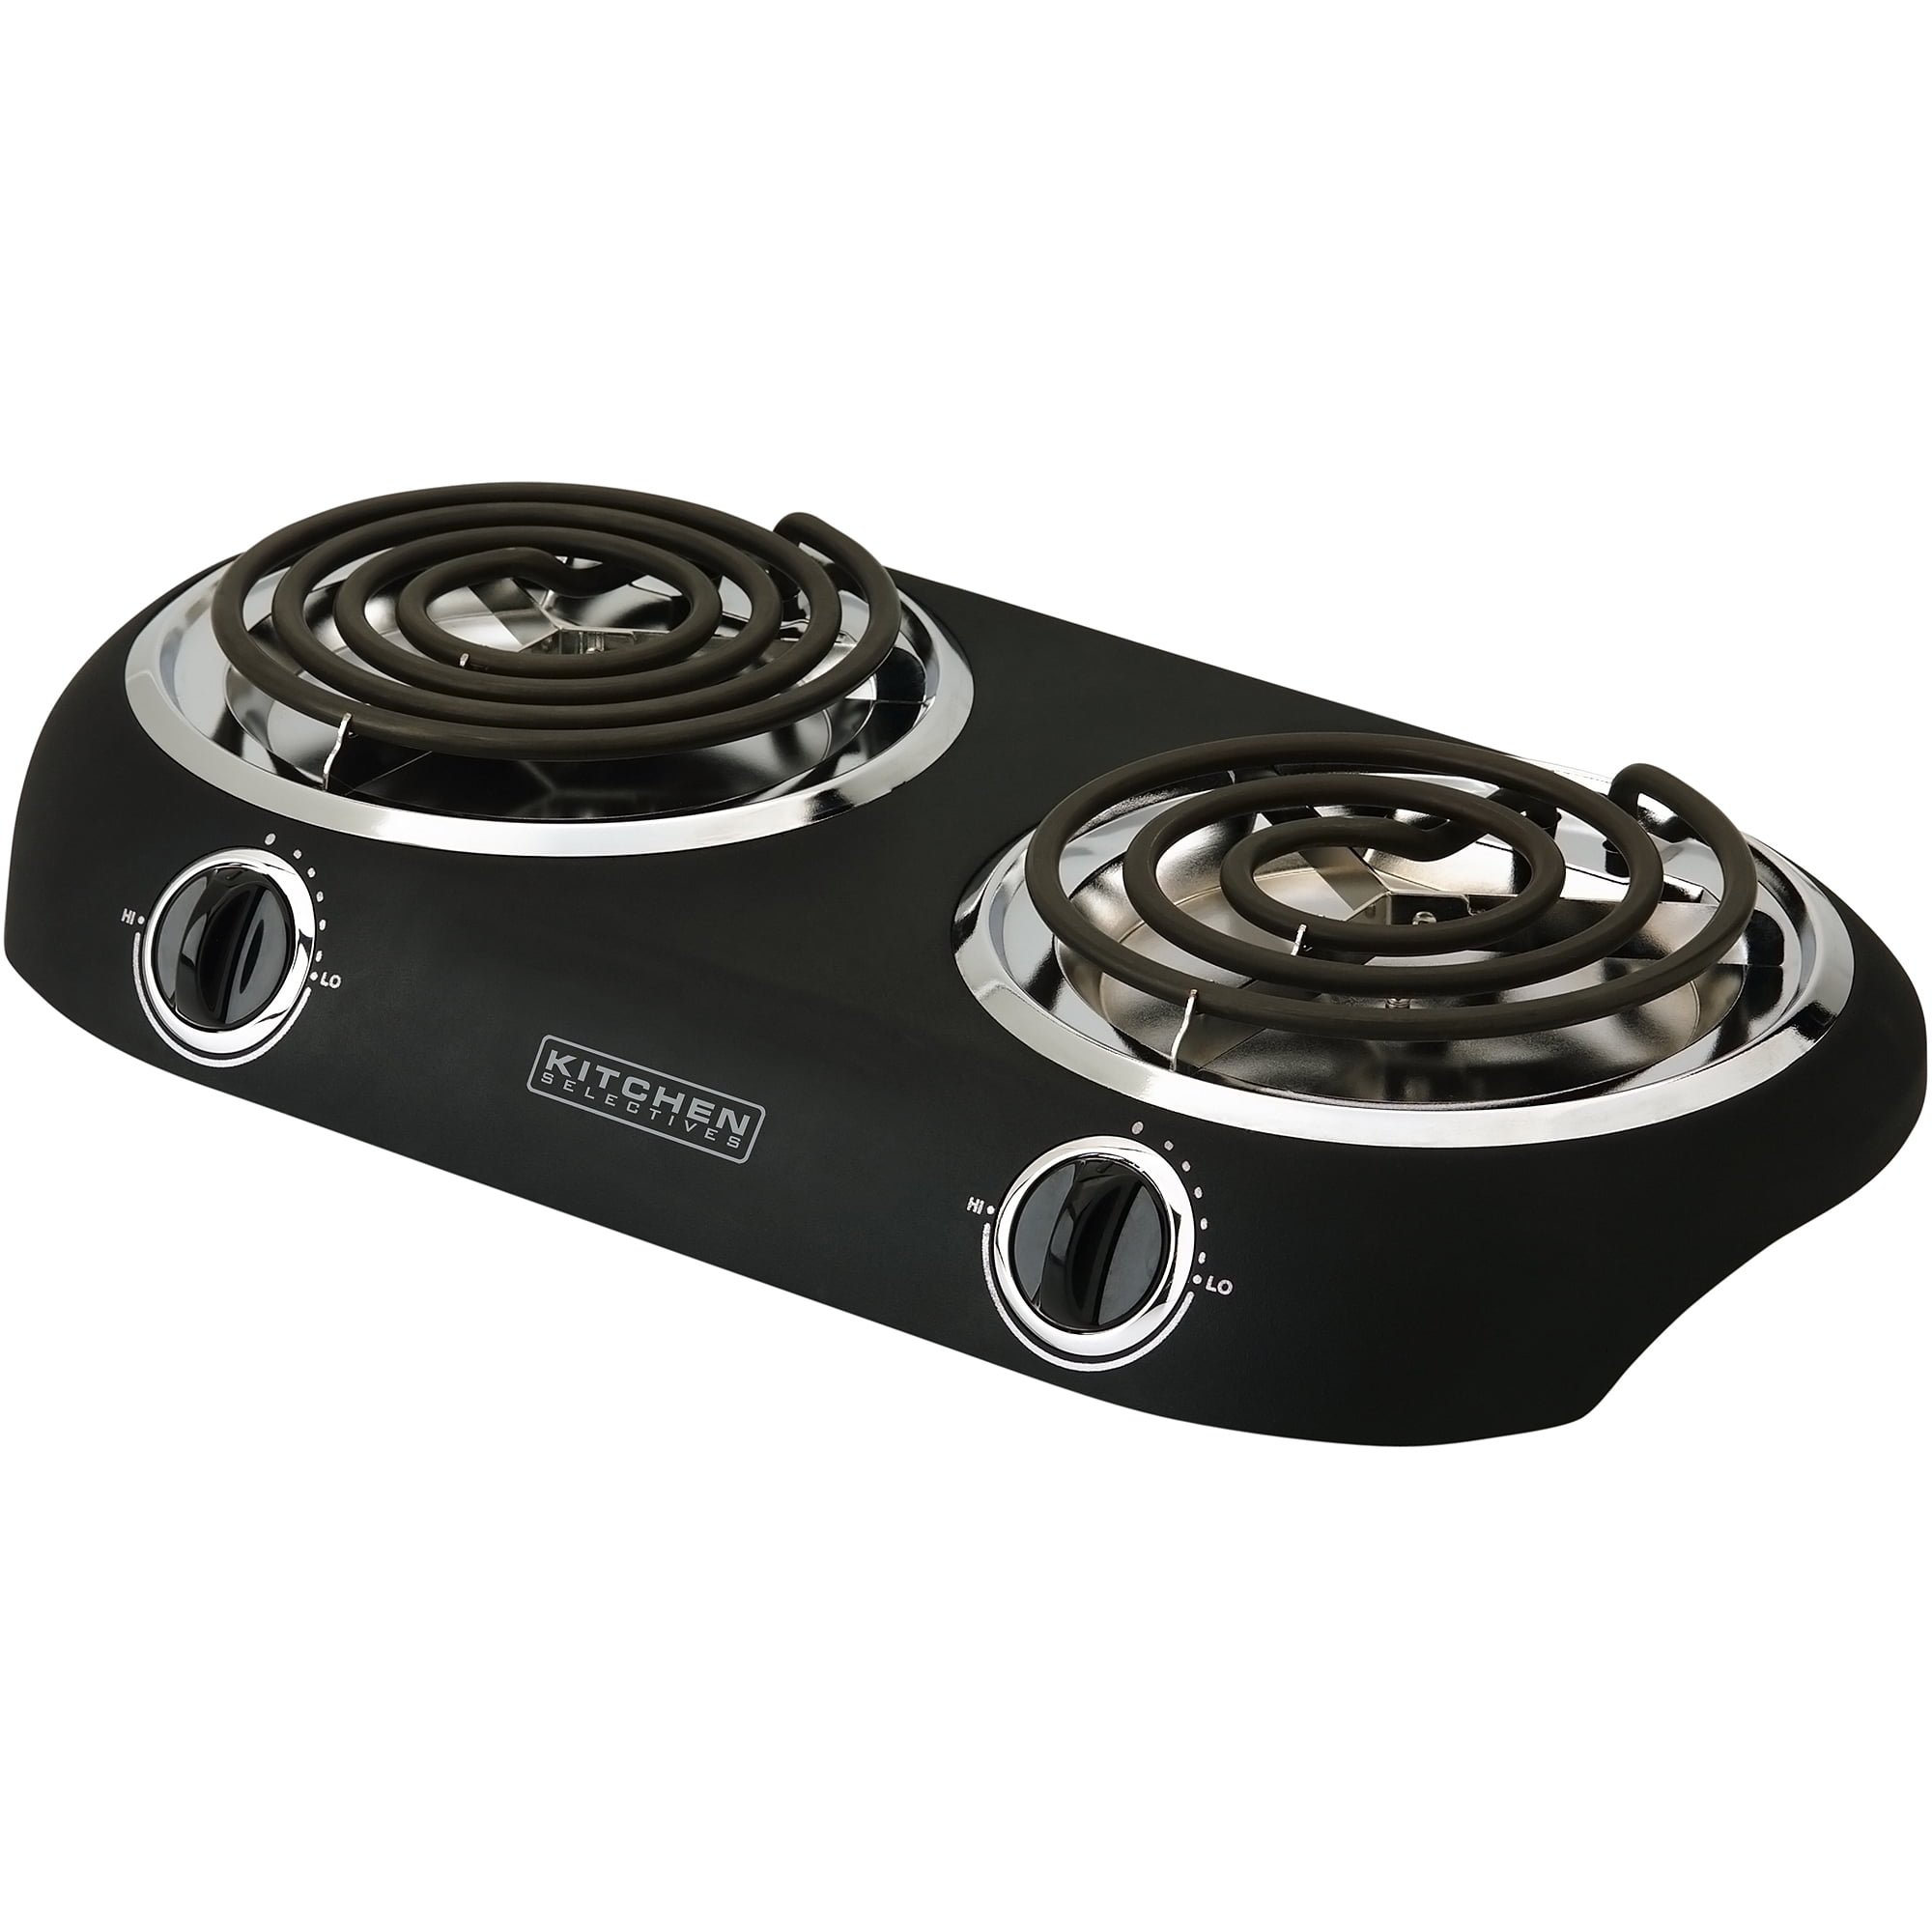 Farberware double burner. 1500 watt electric cooktop. Convenient